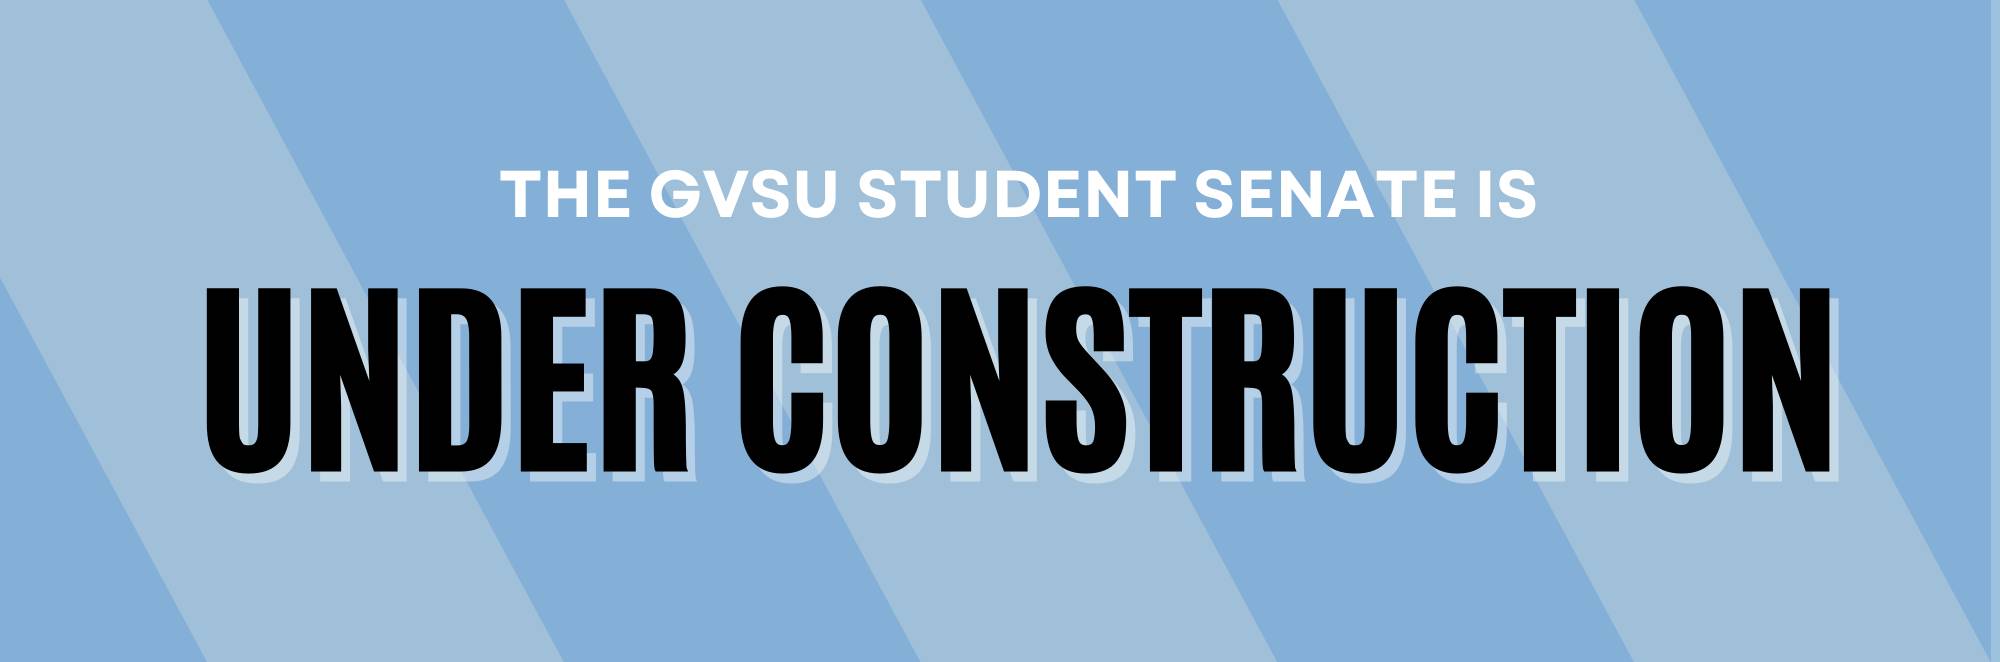 The GVSU Student Senate is Under Construction